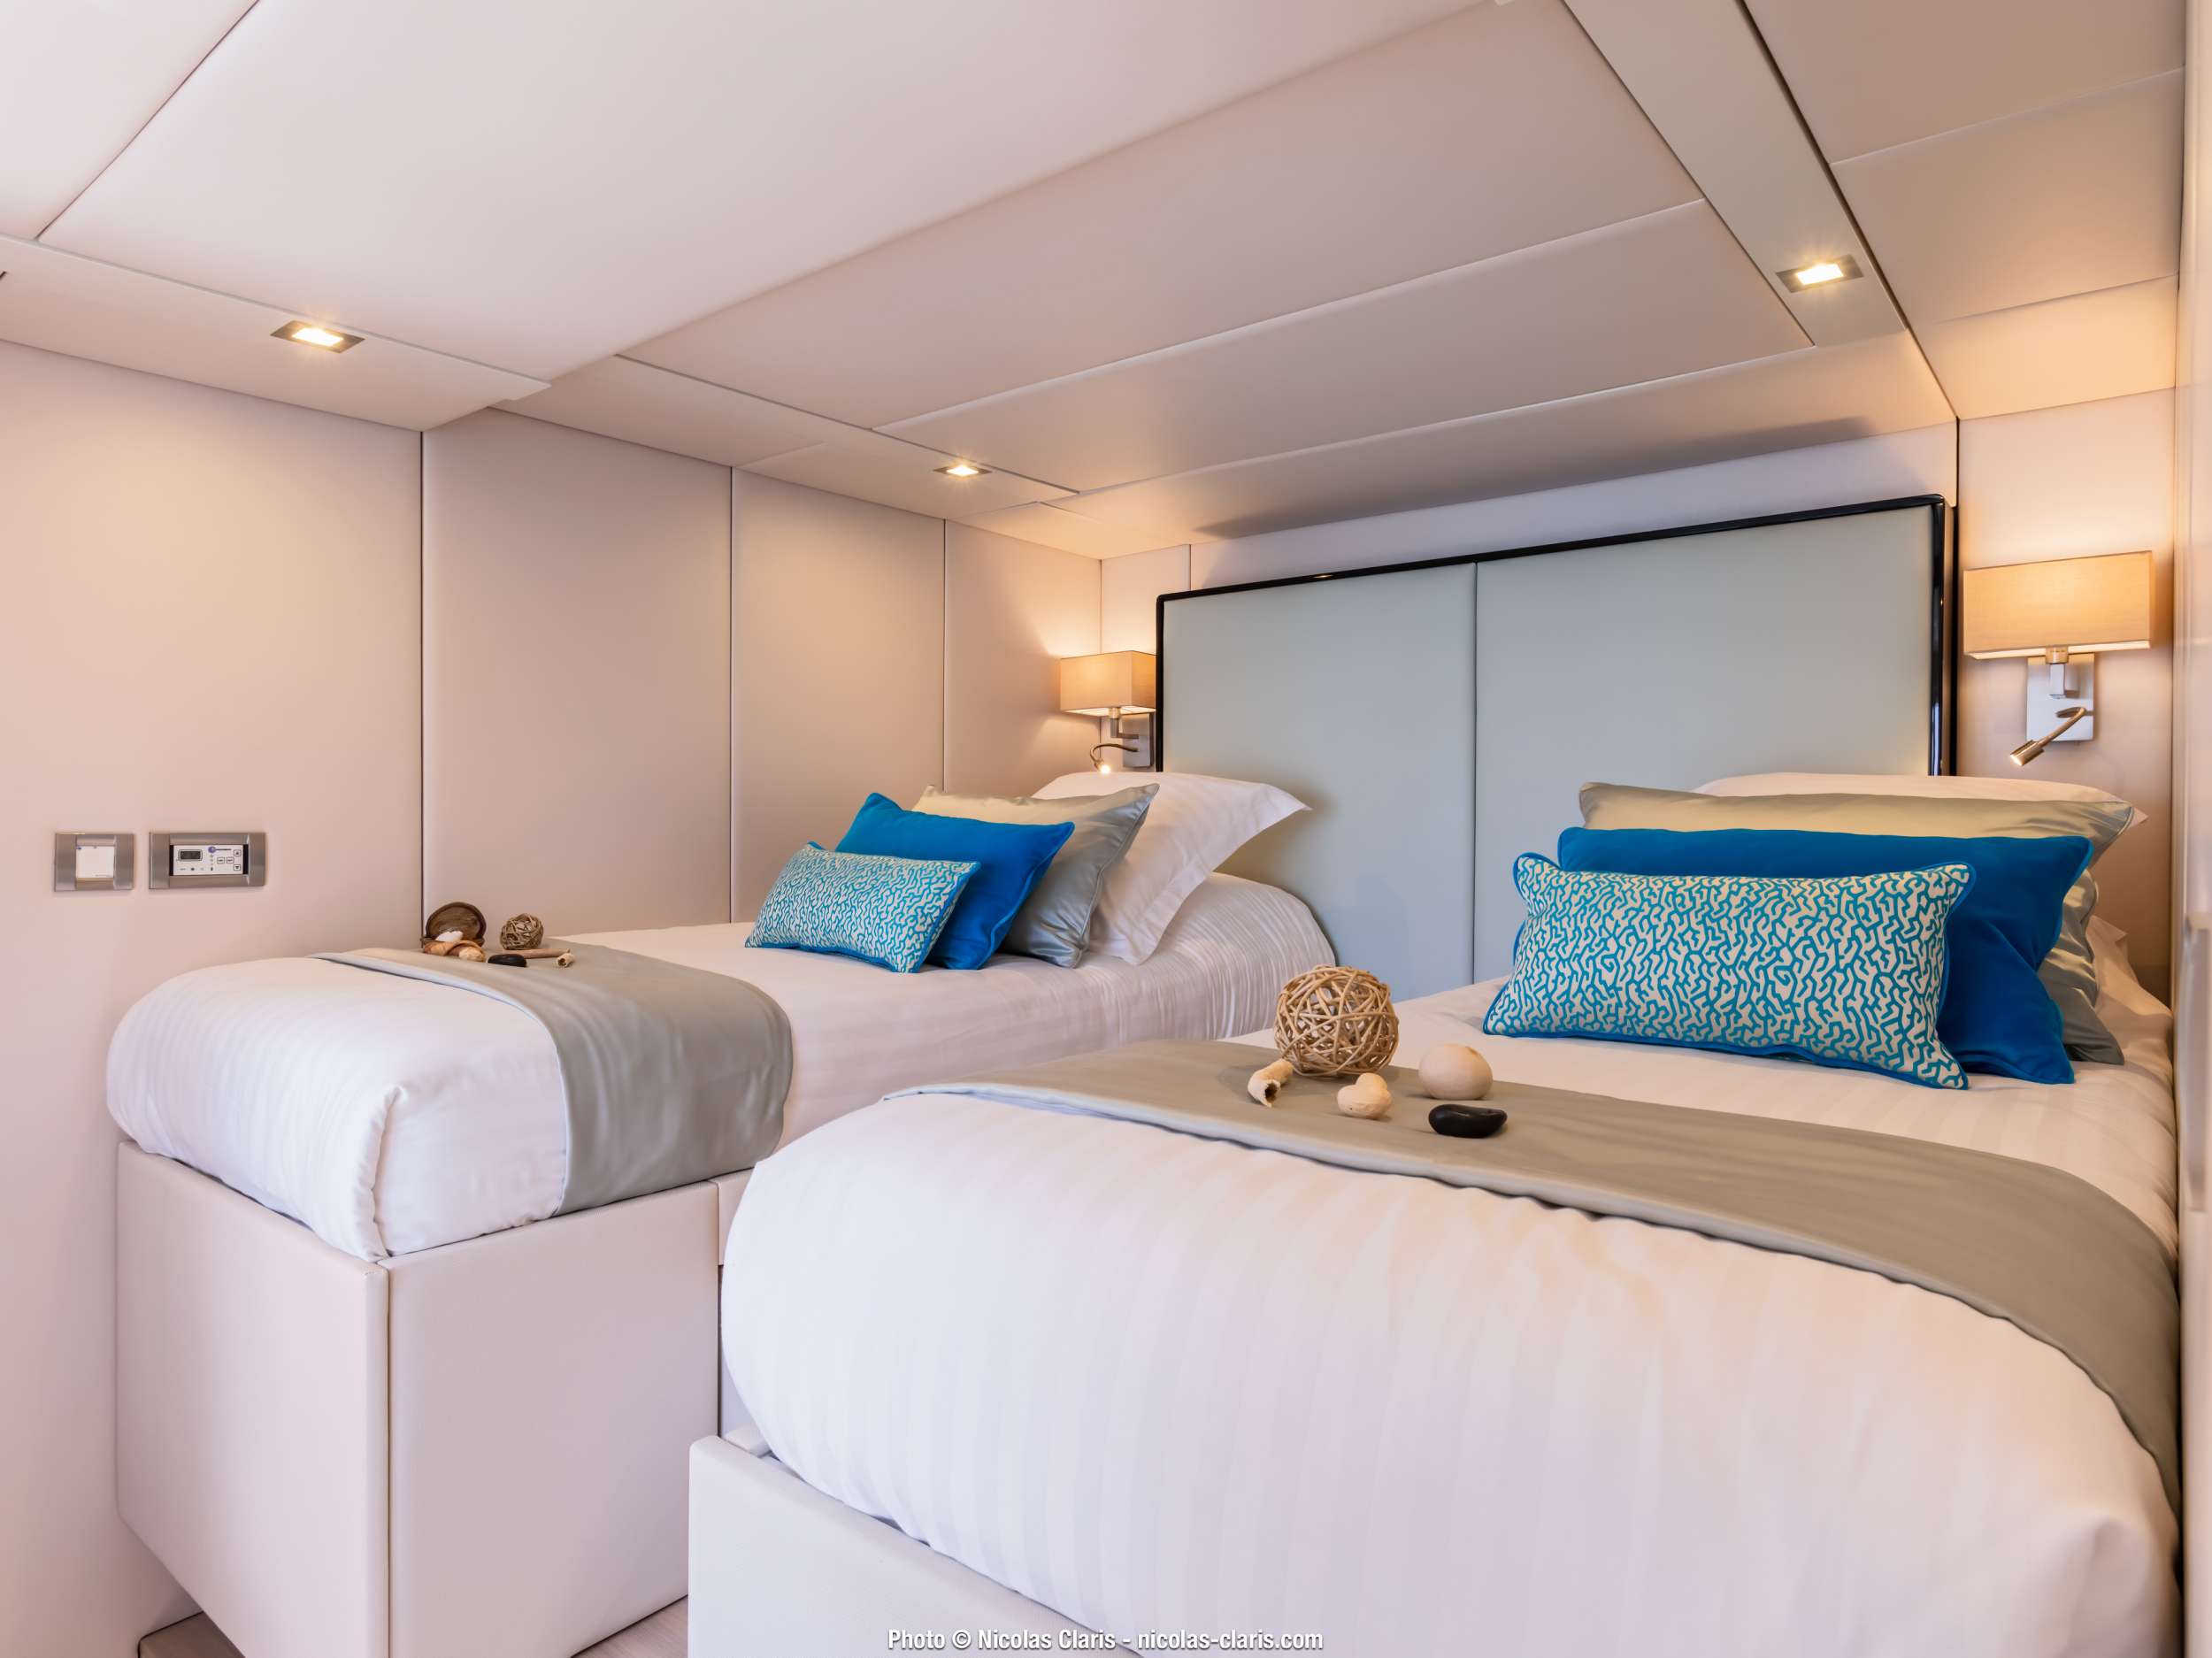 Motor Yacht 'MAYRILOU' VIP cabin bathroom, 10 PAX, 4 Crew, 68.00 Ft, 20.00 Meters, Built 2017, Sunreef Yachts